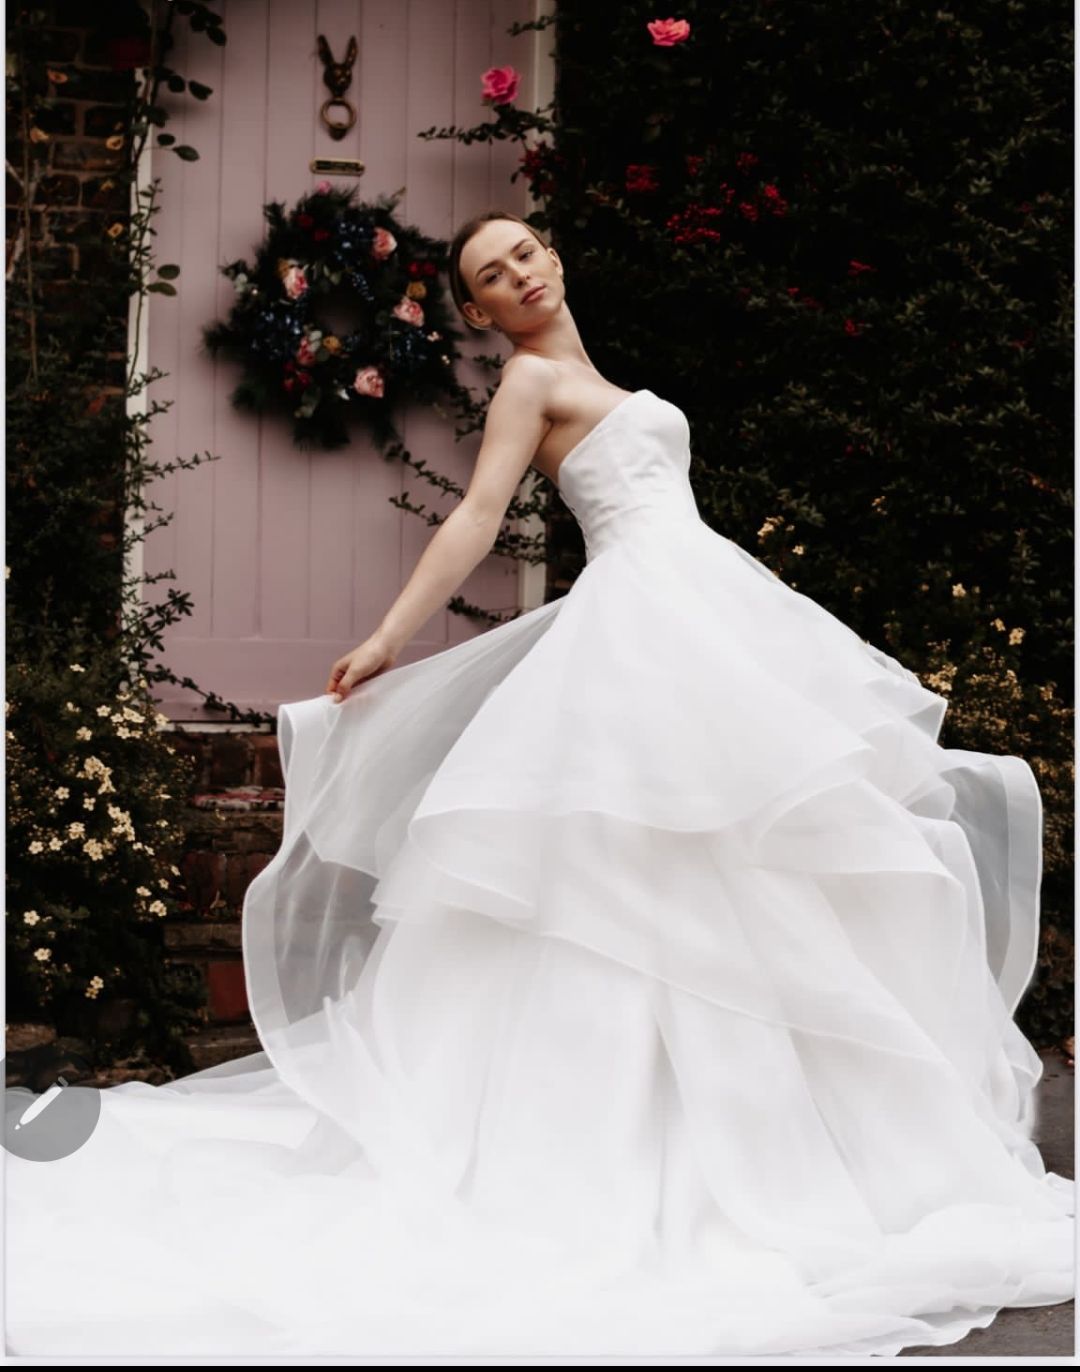 Best Dress 2 Impress Bridal-Image-55